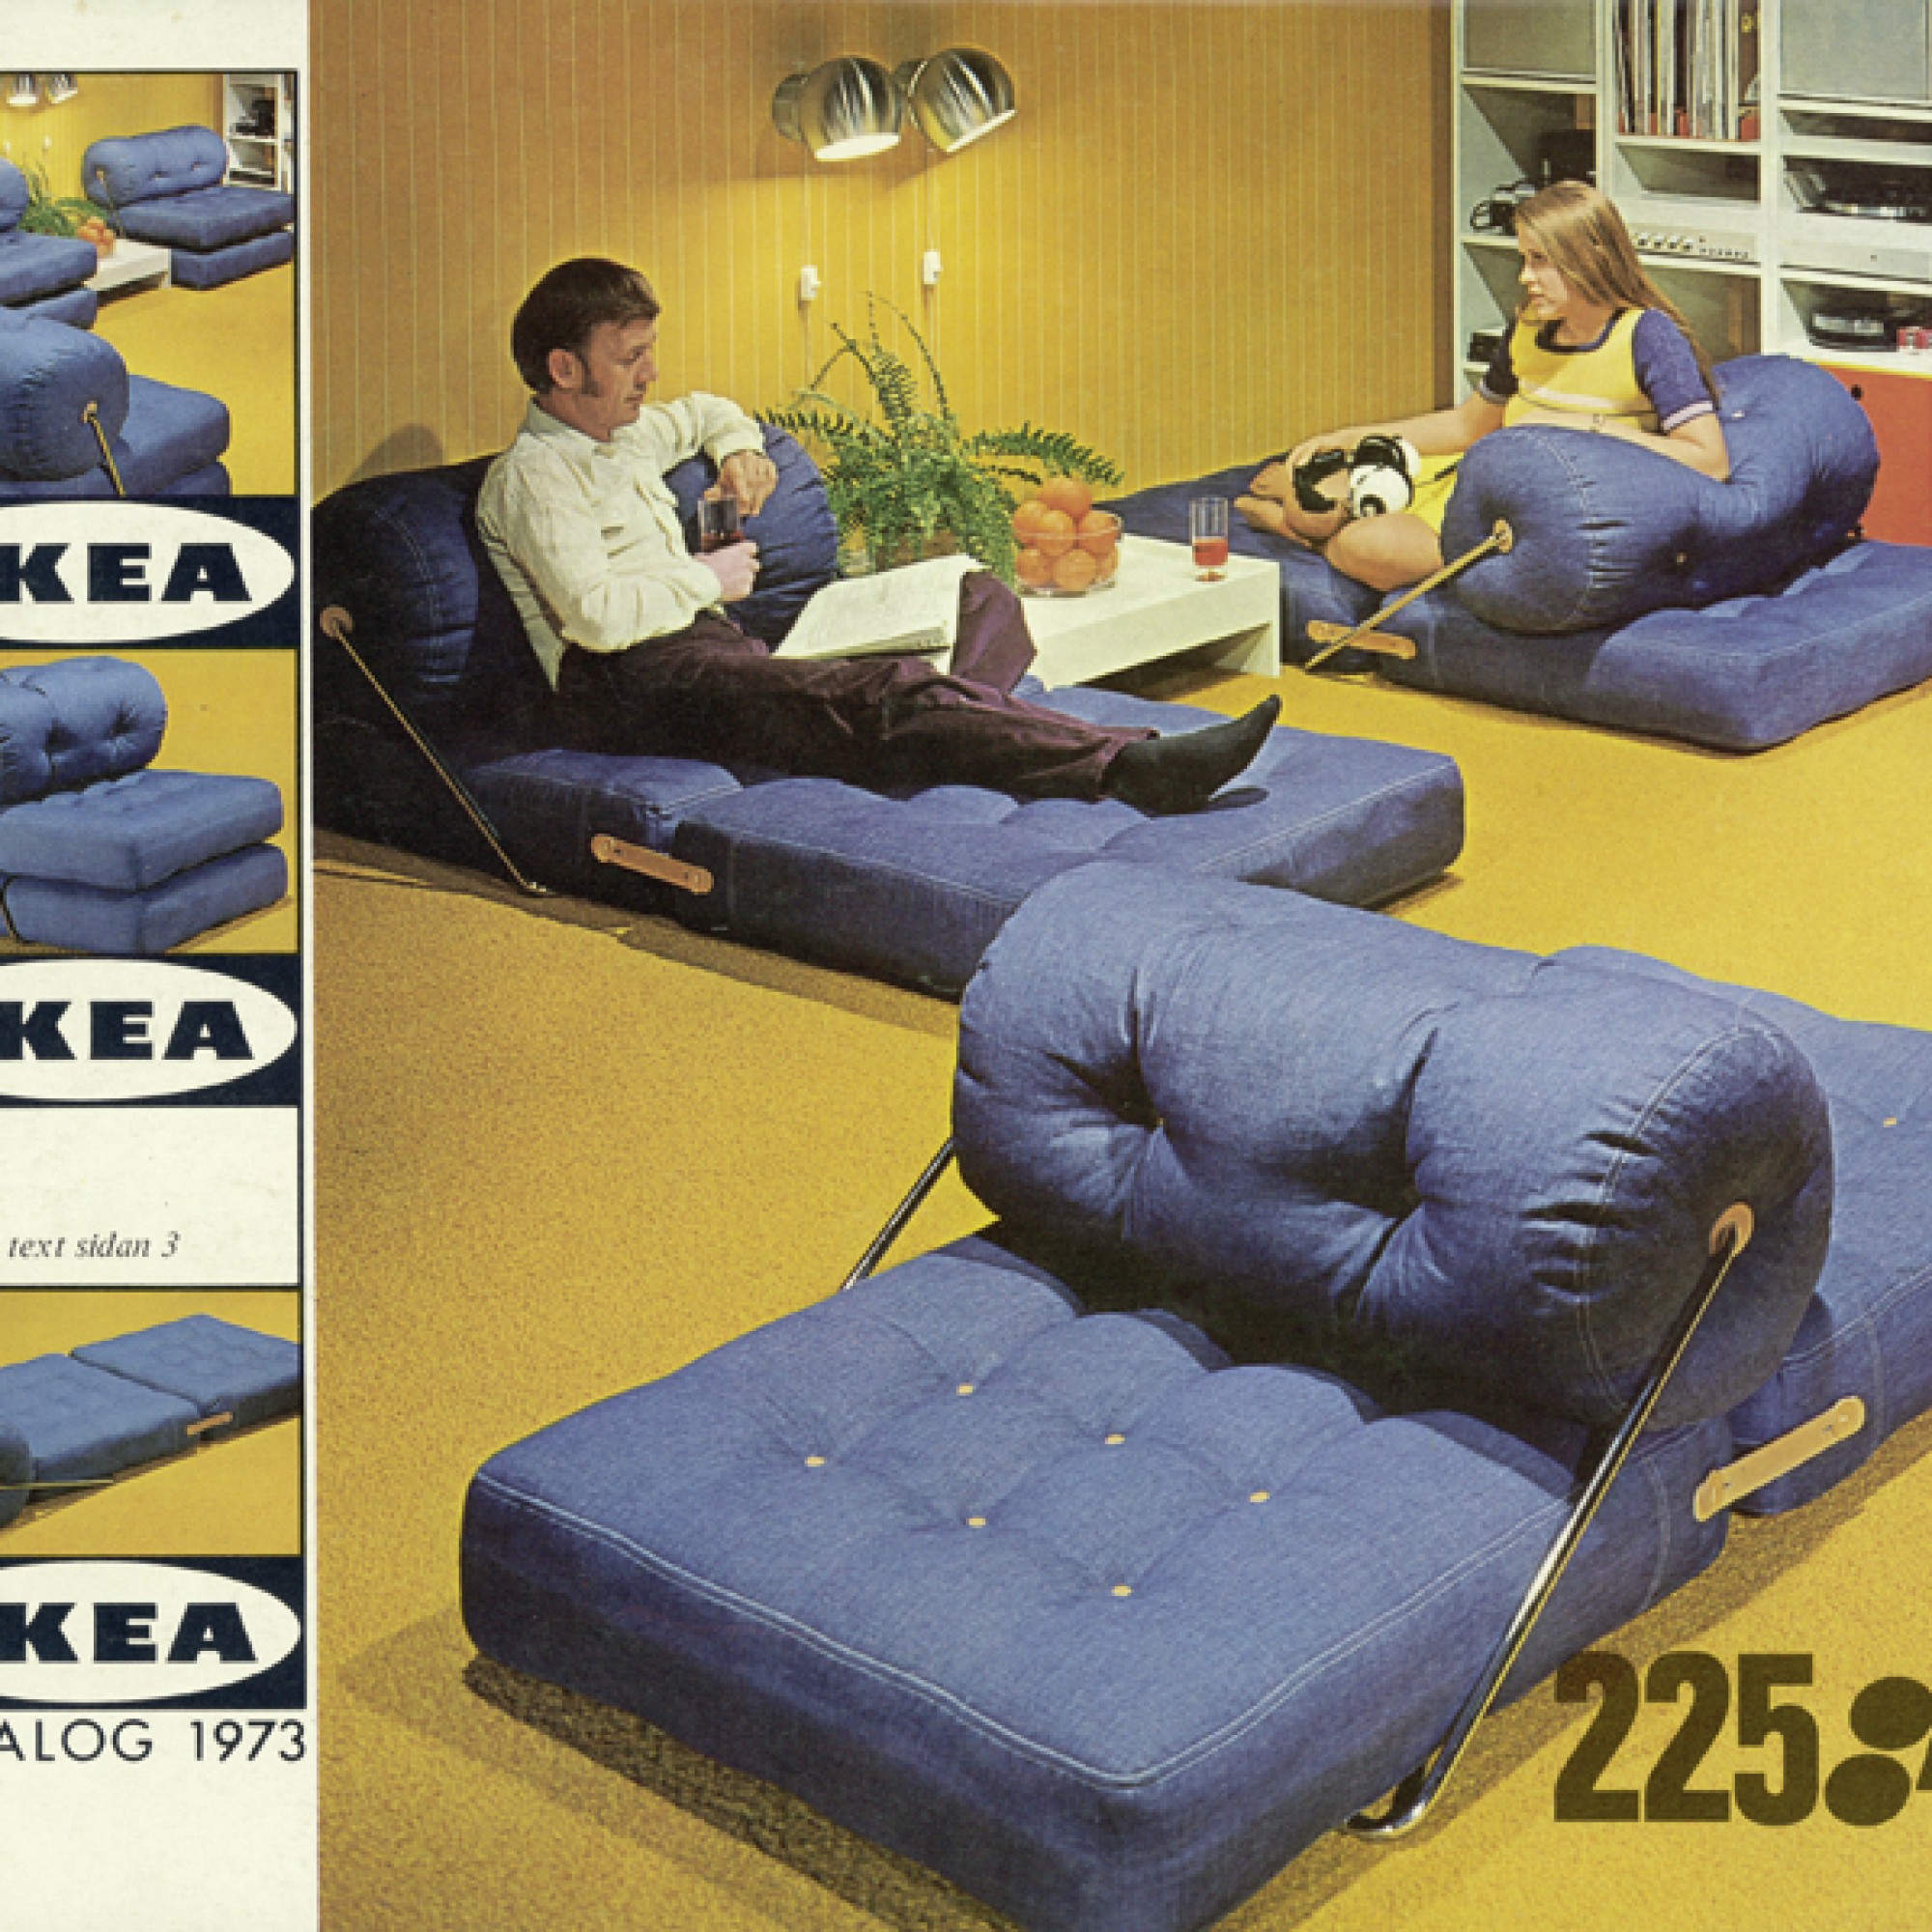 Ikea-Katalog von 1973. (Inter IKEA Systems B.V. 2016 )